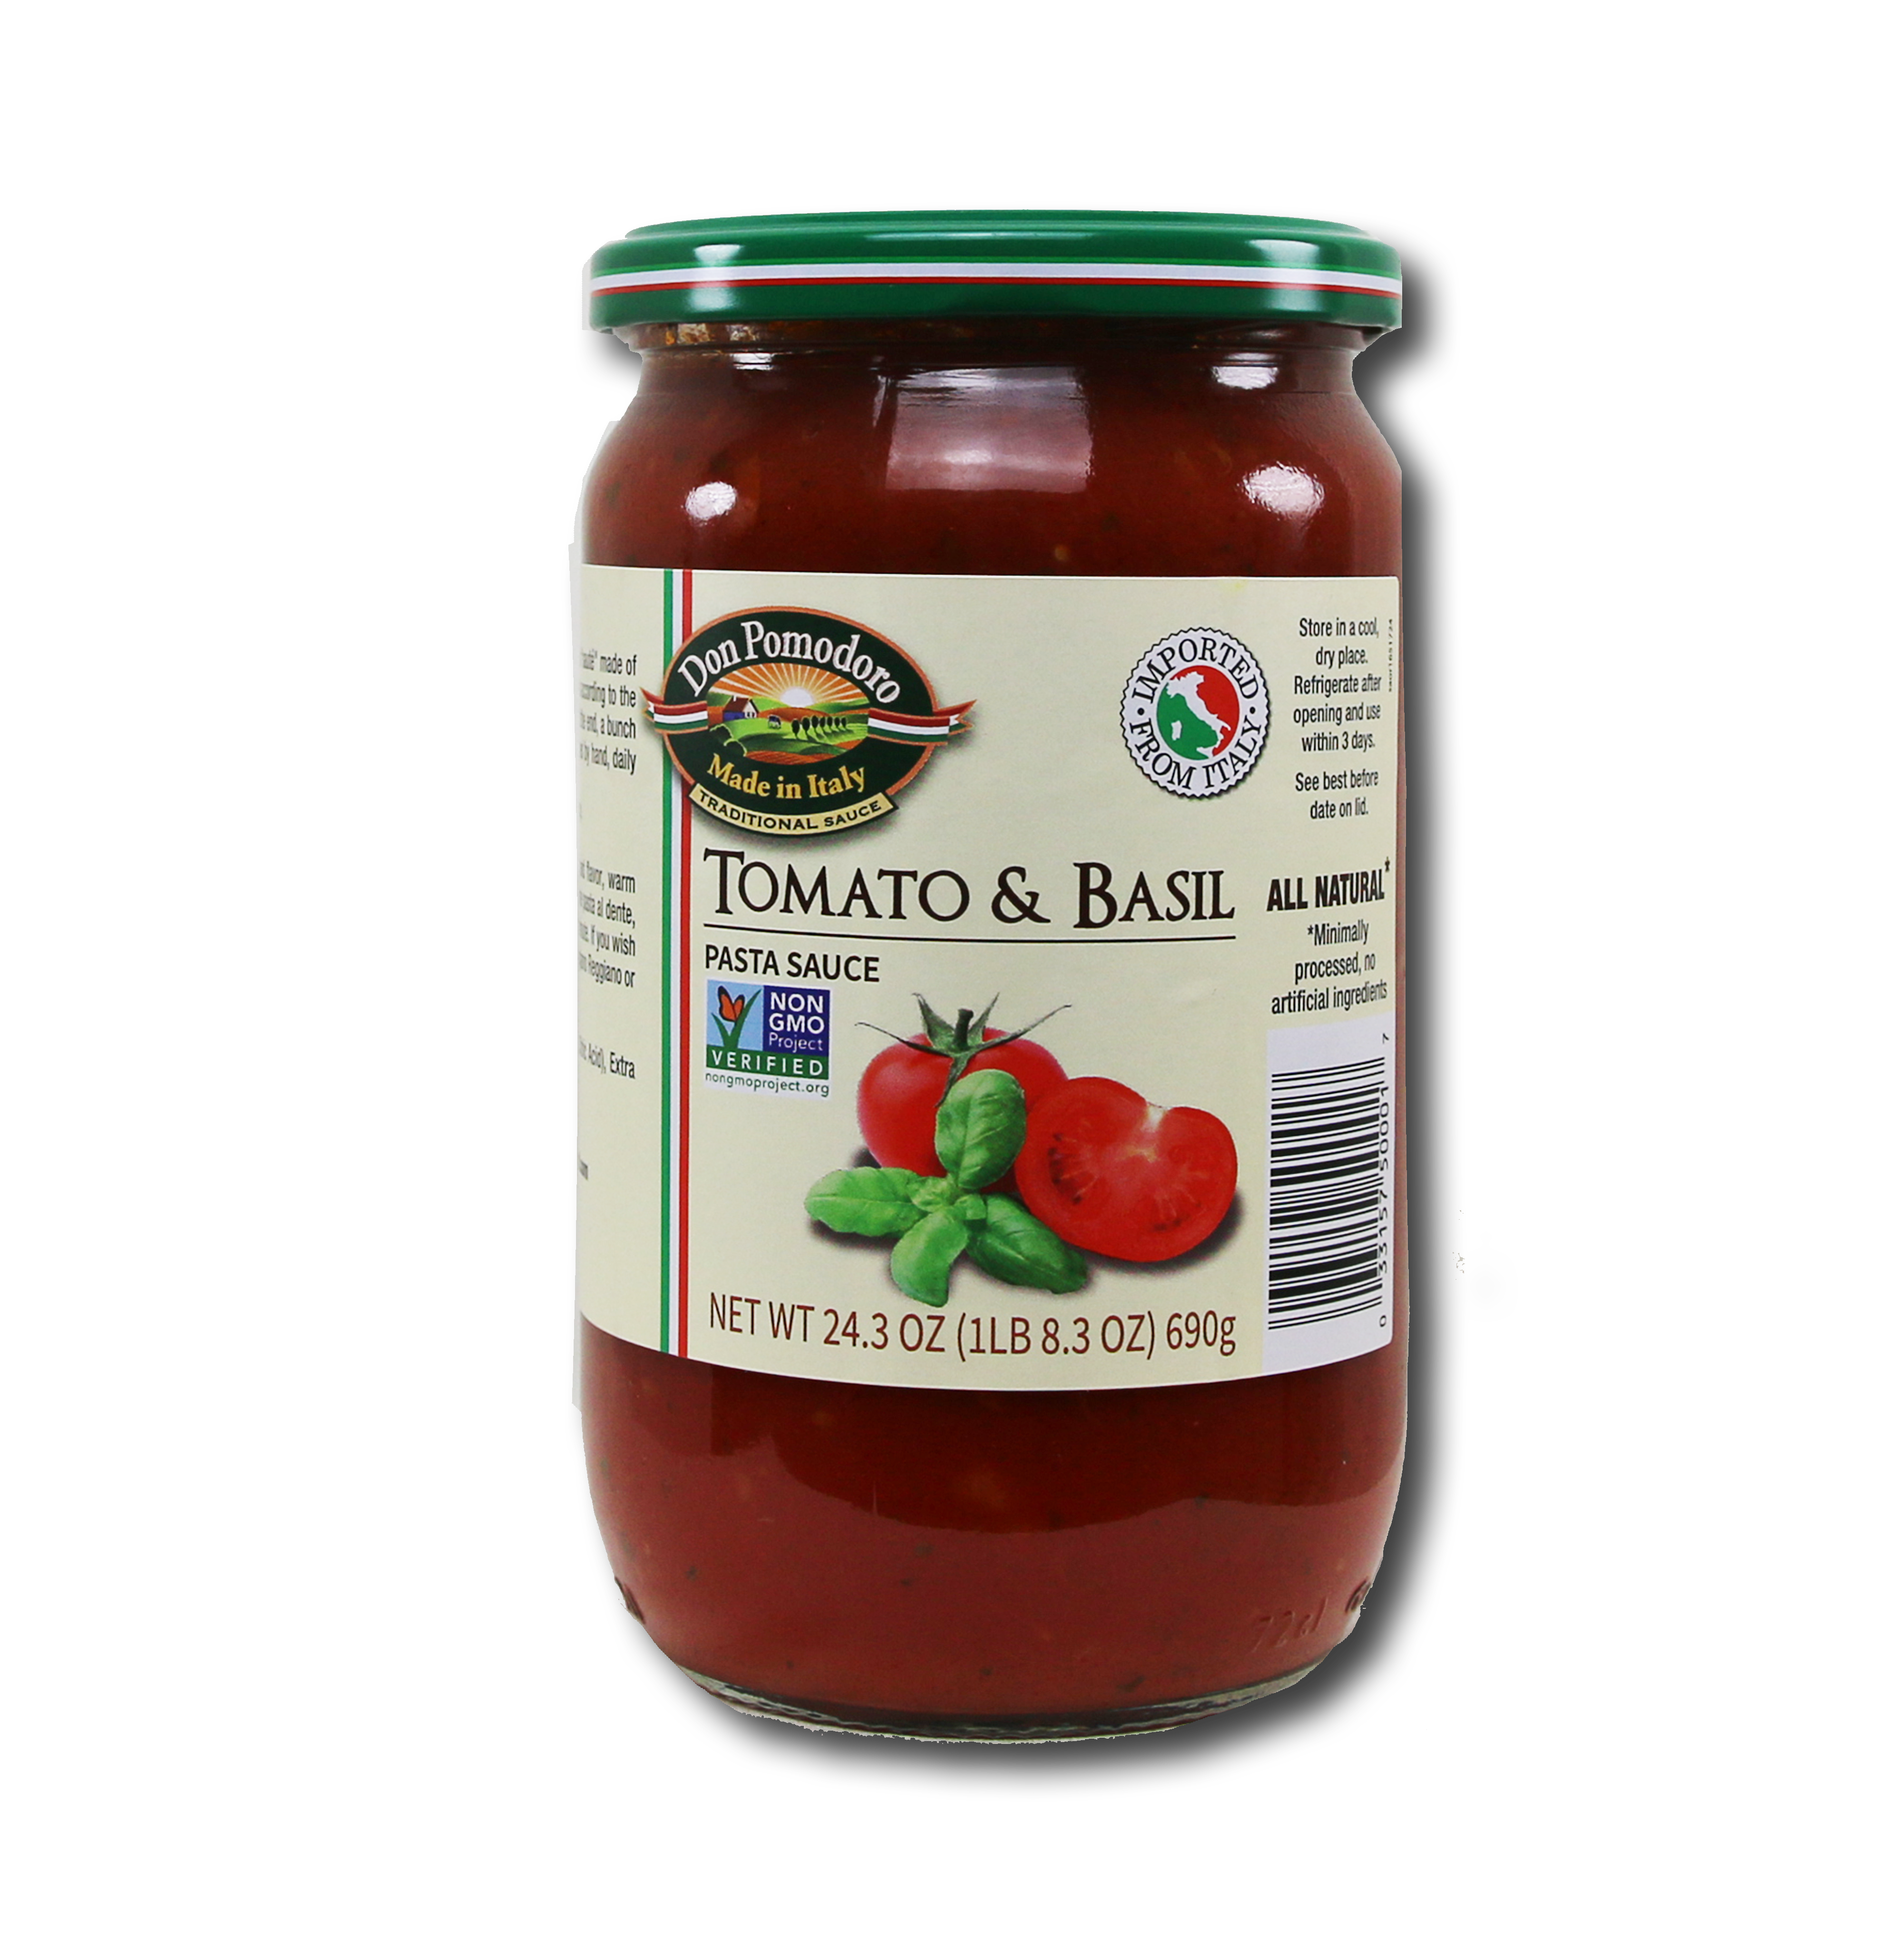 Don Pomodoro Tomato Basil Sauce